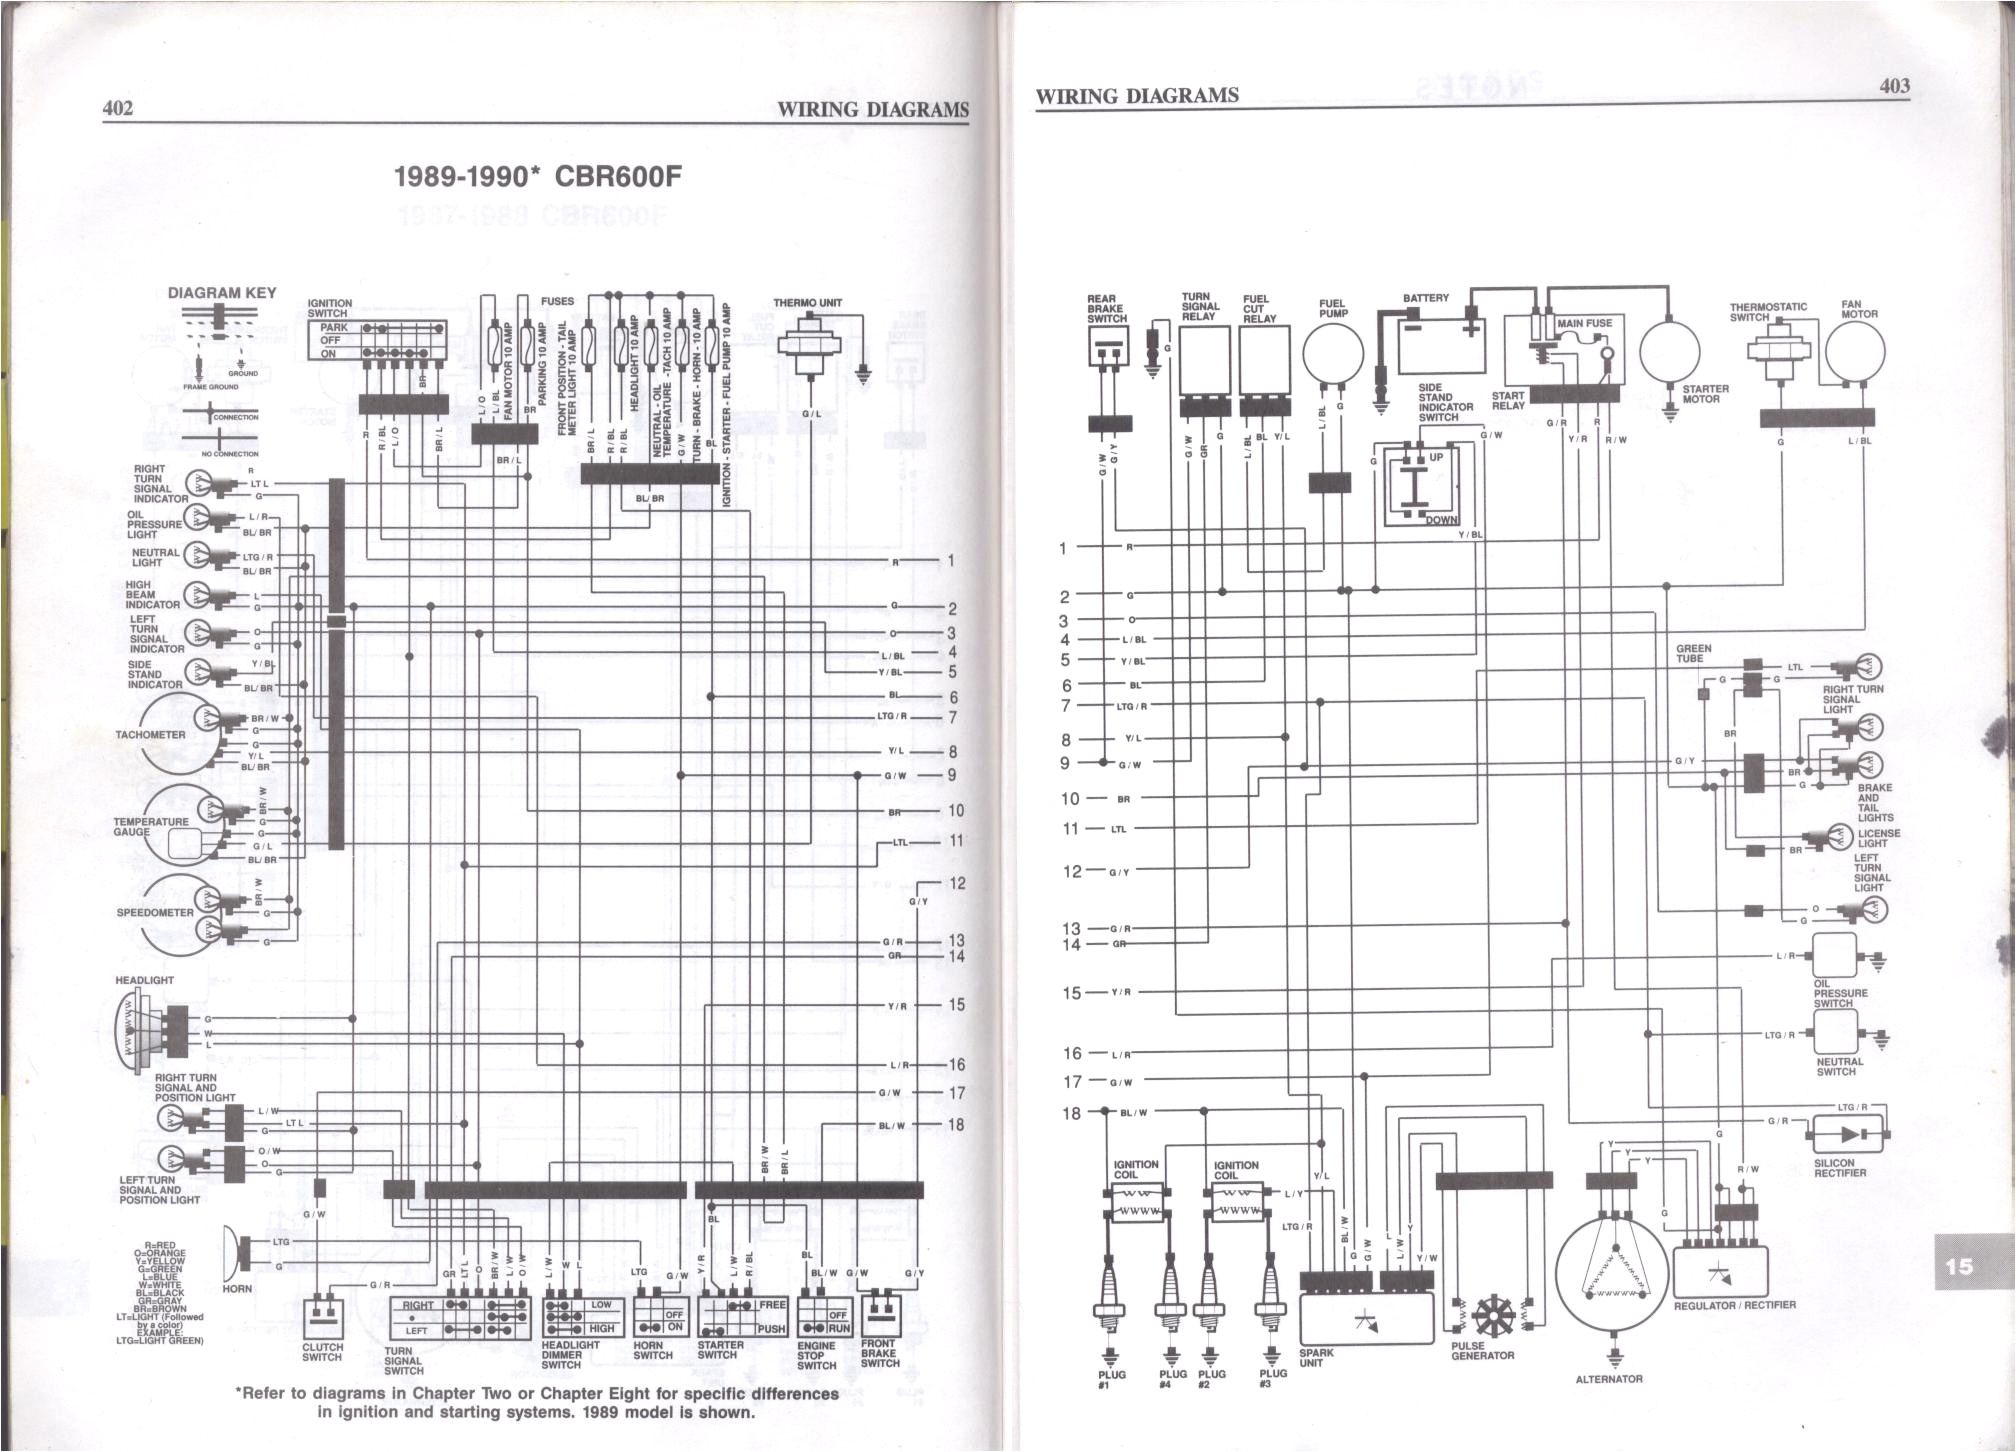 wiring diagram program wiring diagram software new wiring diagram honda c70 inspirationa index 0 0d 9g jpg